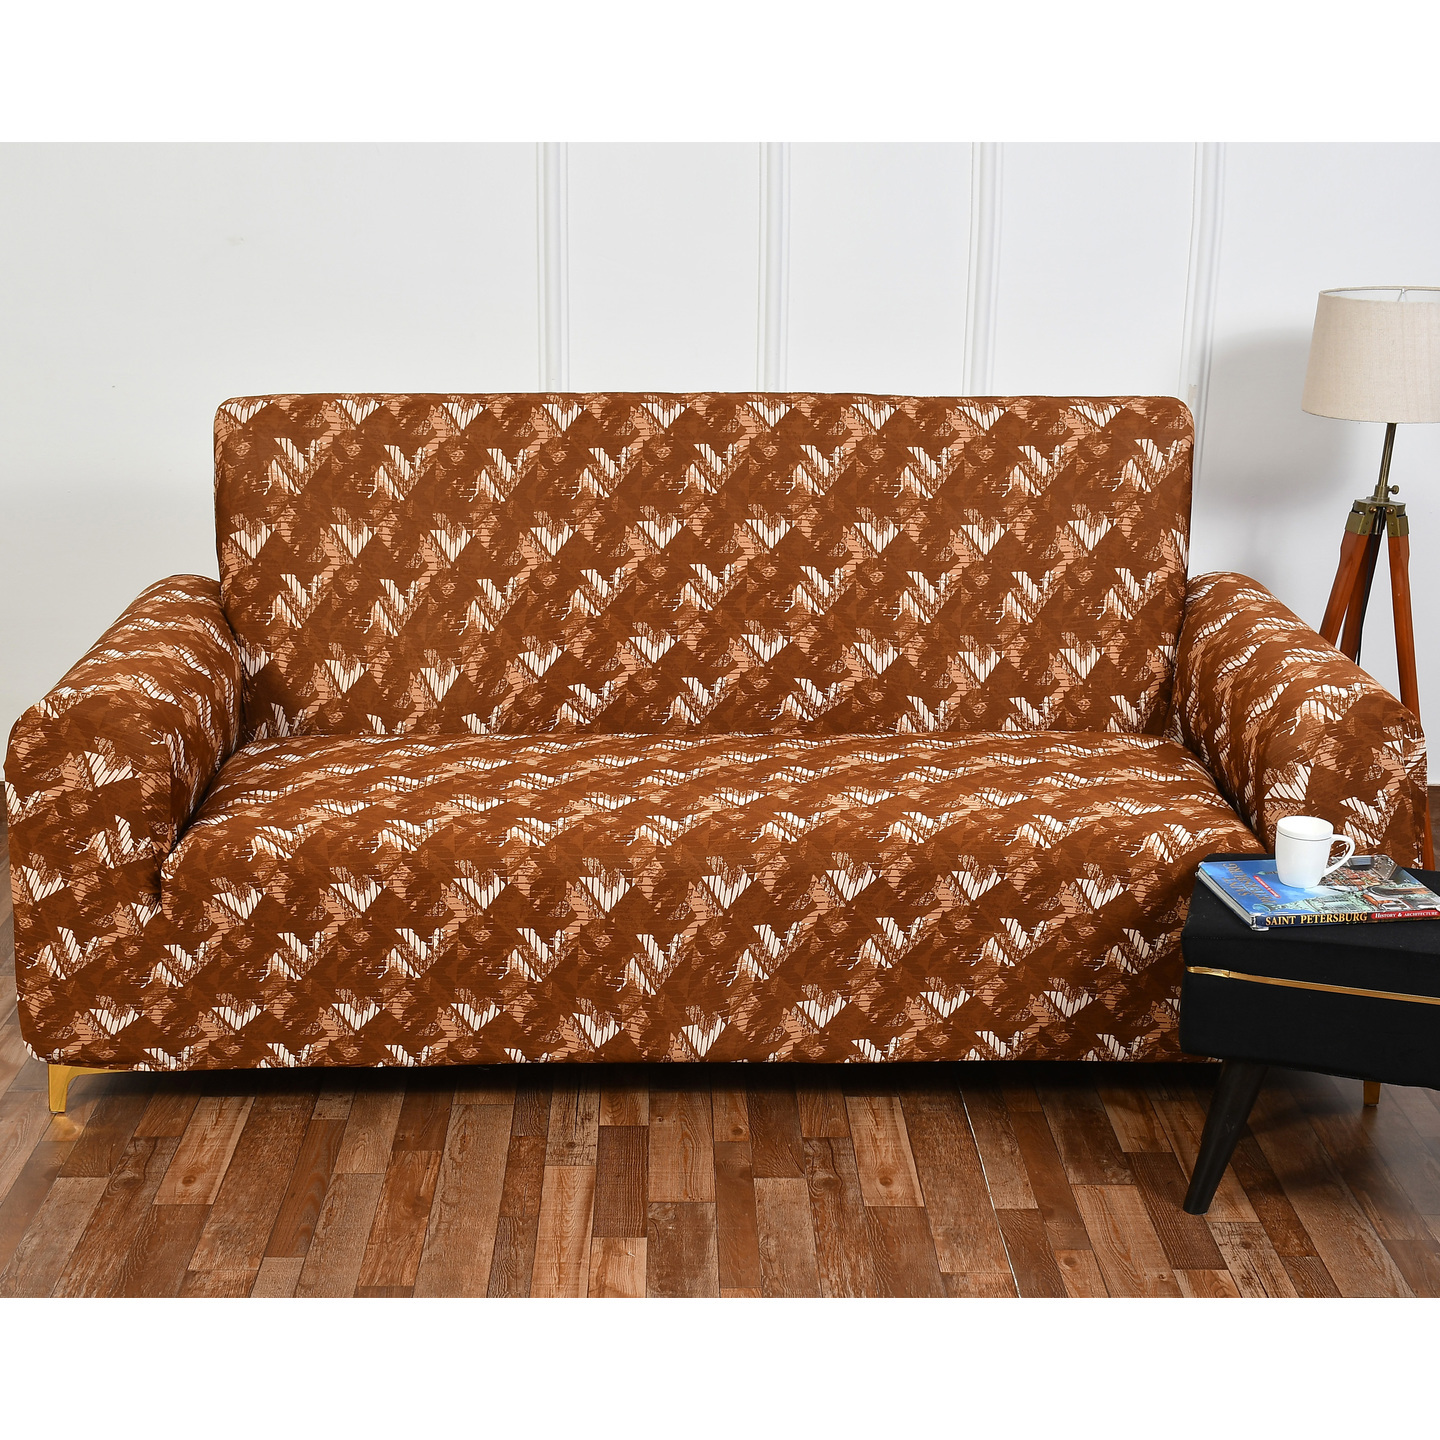 Handtex Home Premium Three Seater Sofa Cover Big Elasticity Cover,Flexible Stretch Sofa Slipcover 3 Seater, 185 X 230cm Pack of One Piece (Camel)